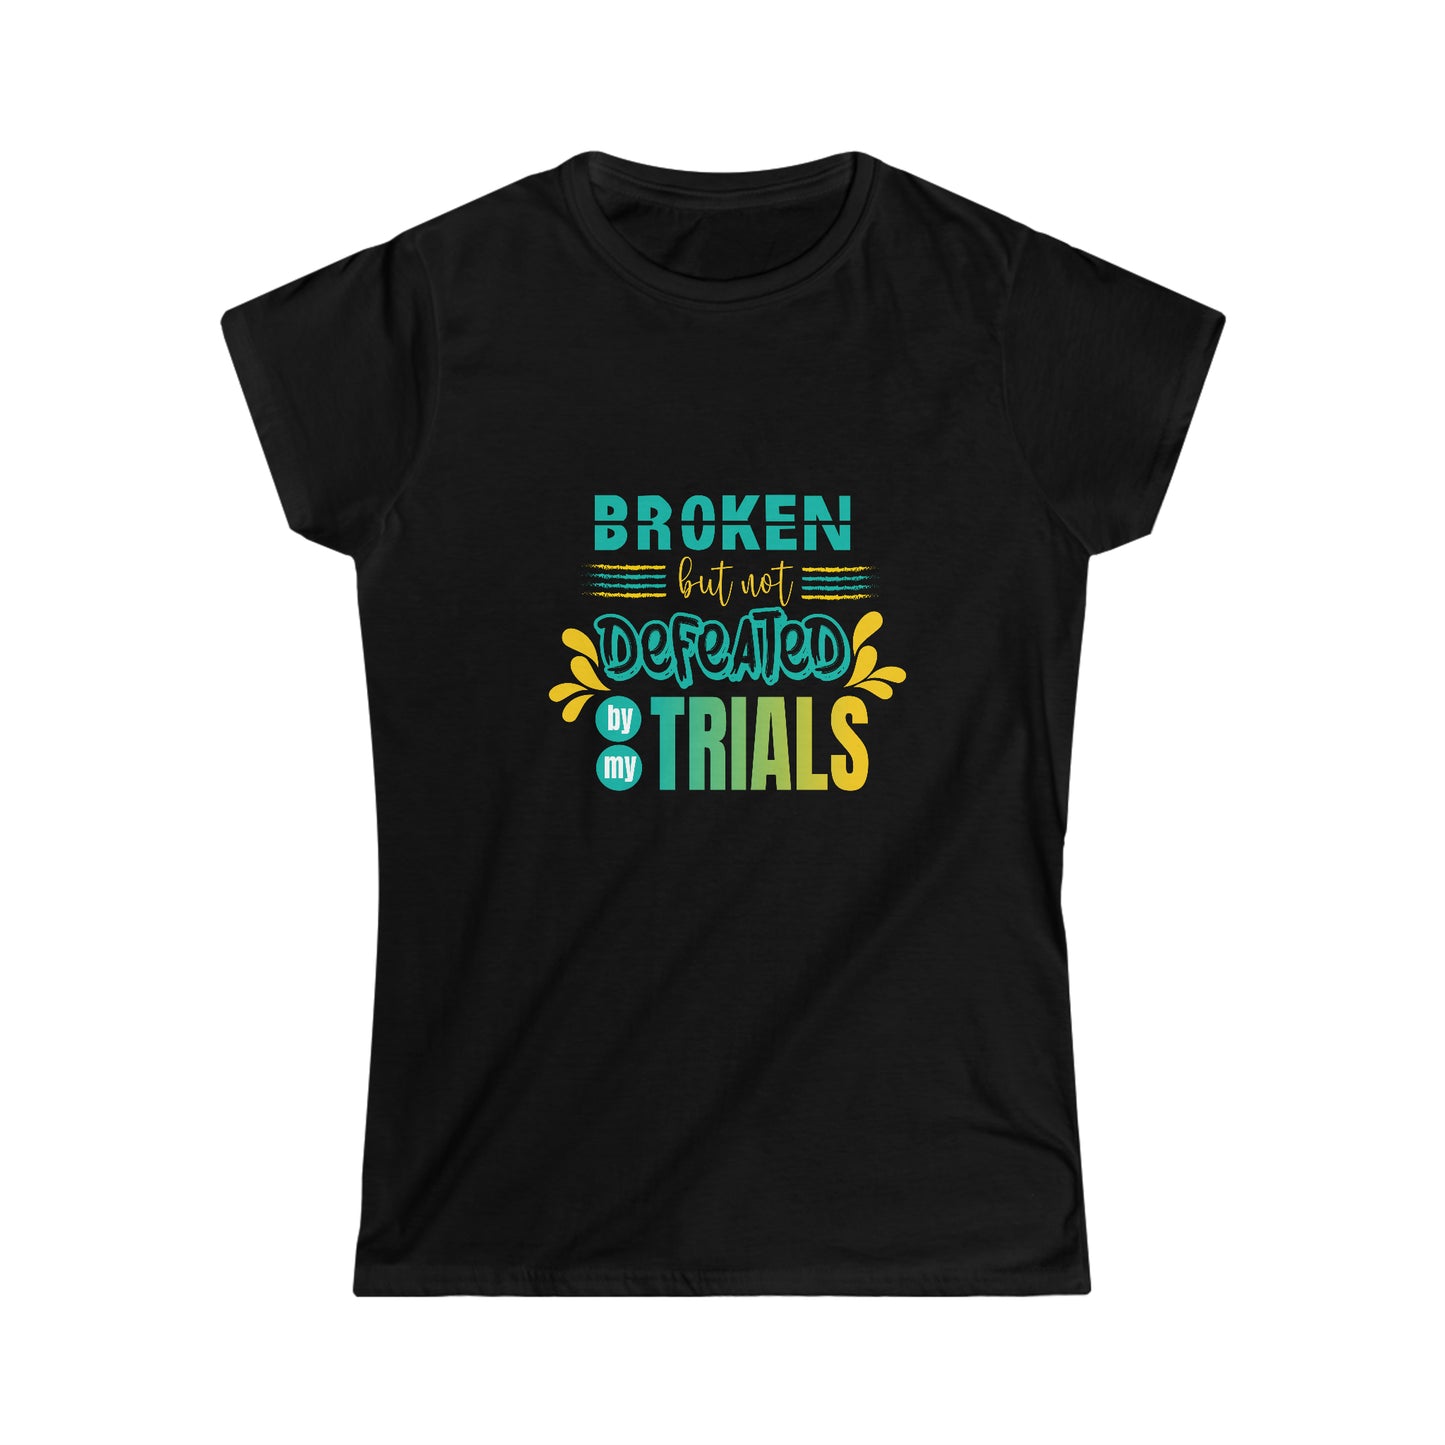 Broken but not Defeated By My Trials Women's T-shirt